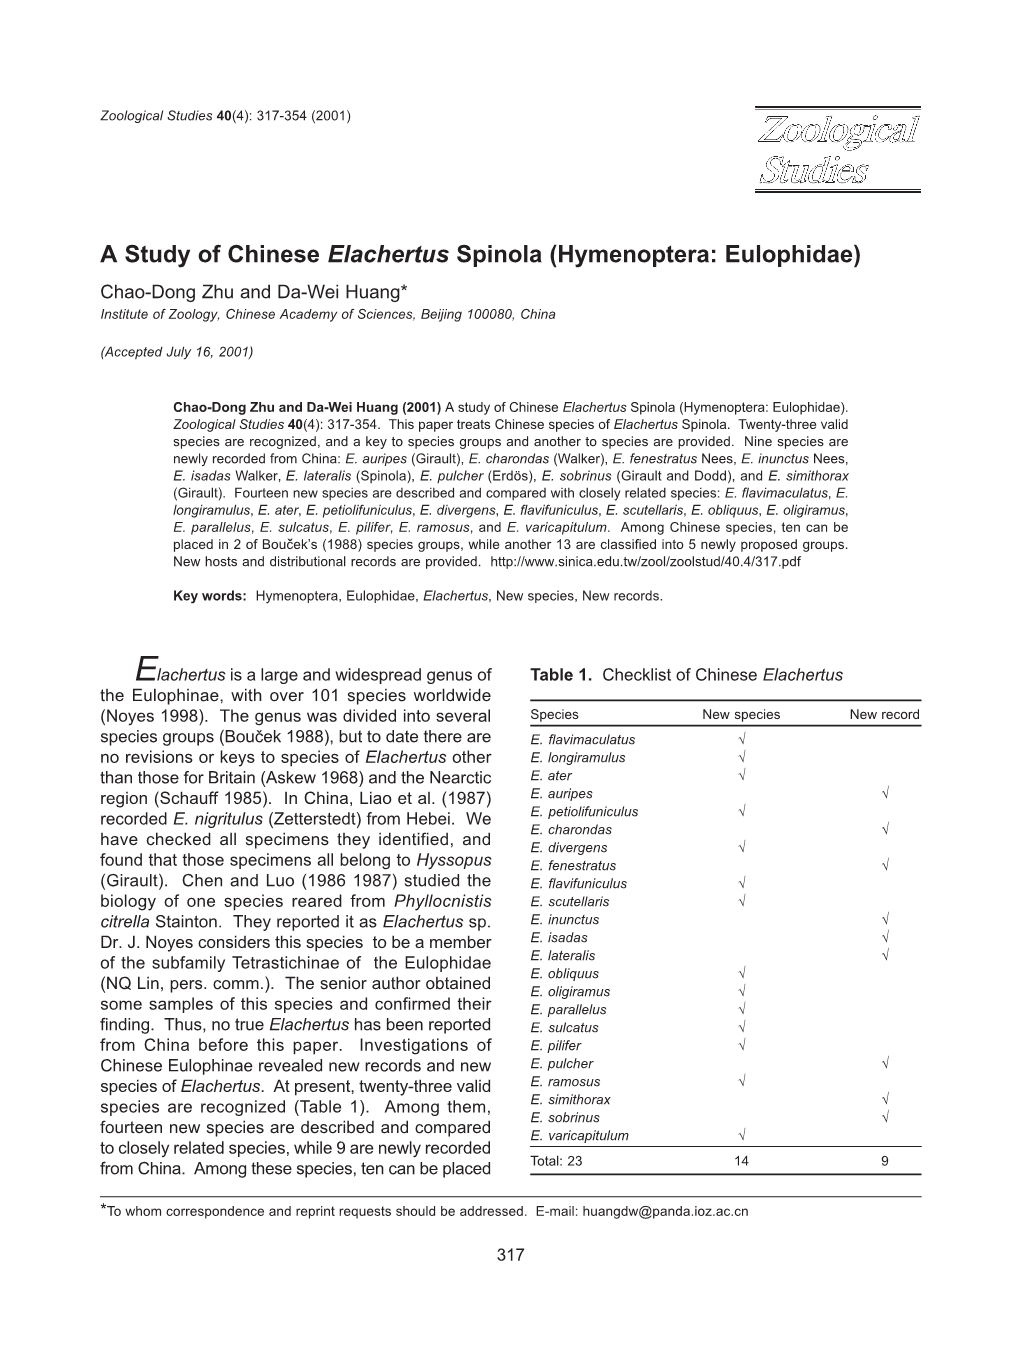 A Study of Chinese Elachertus Spinola